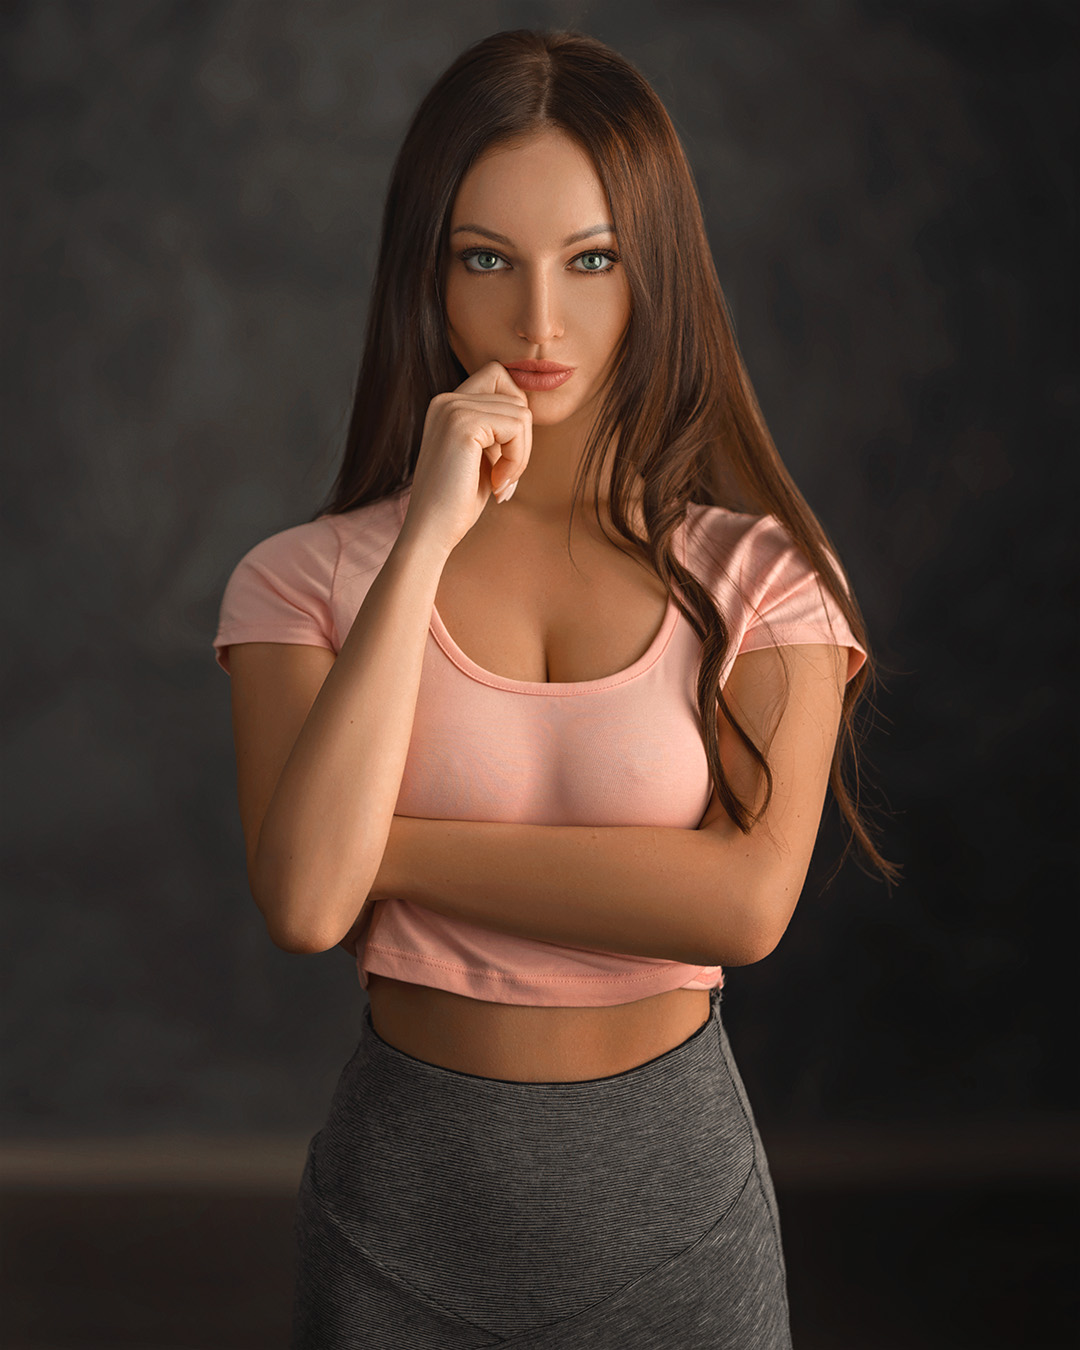 Evgeny Sibiraev Women Model 1080x1350